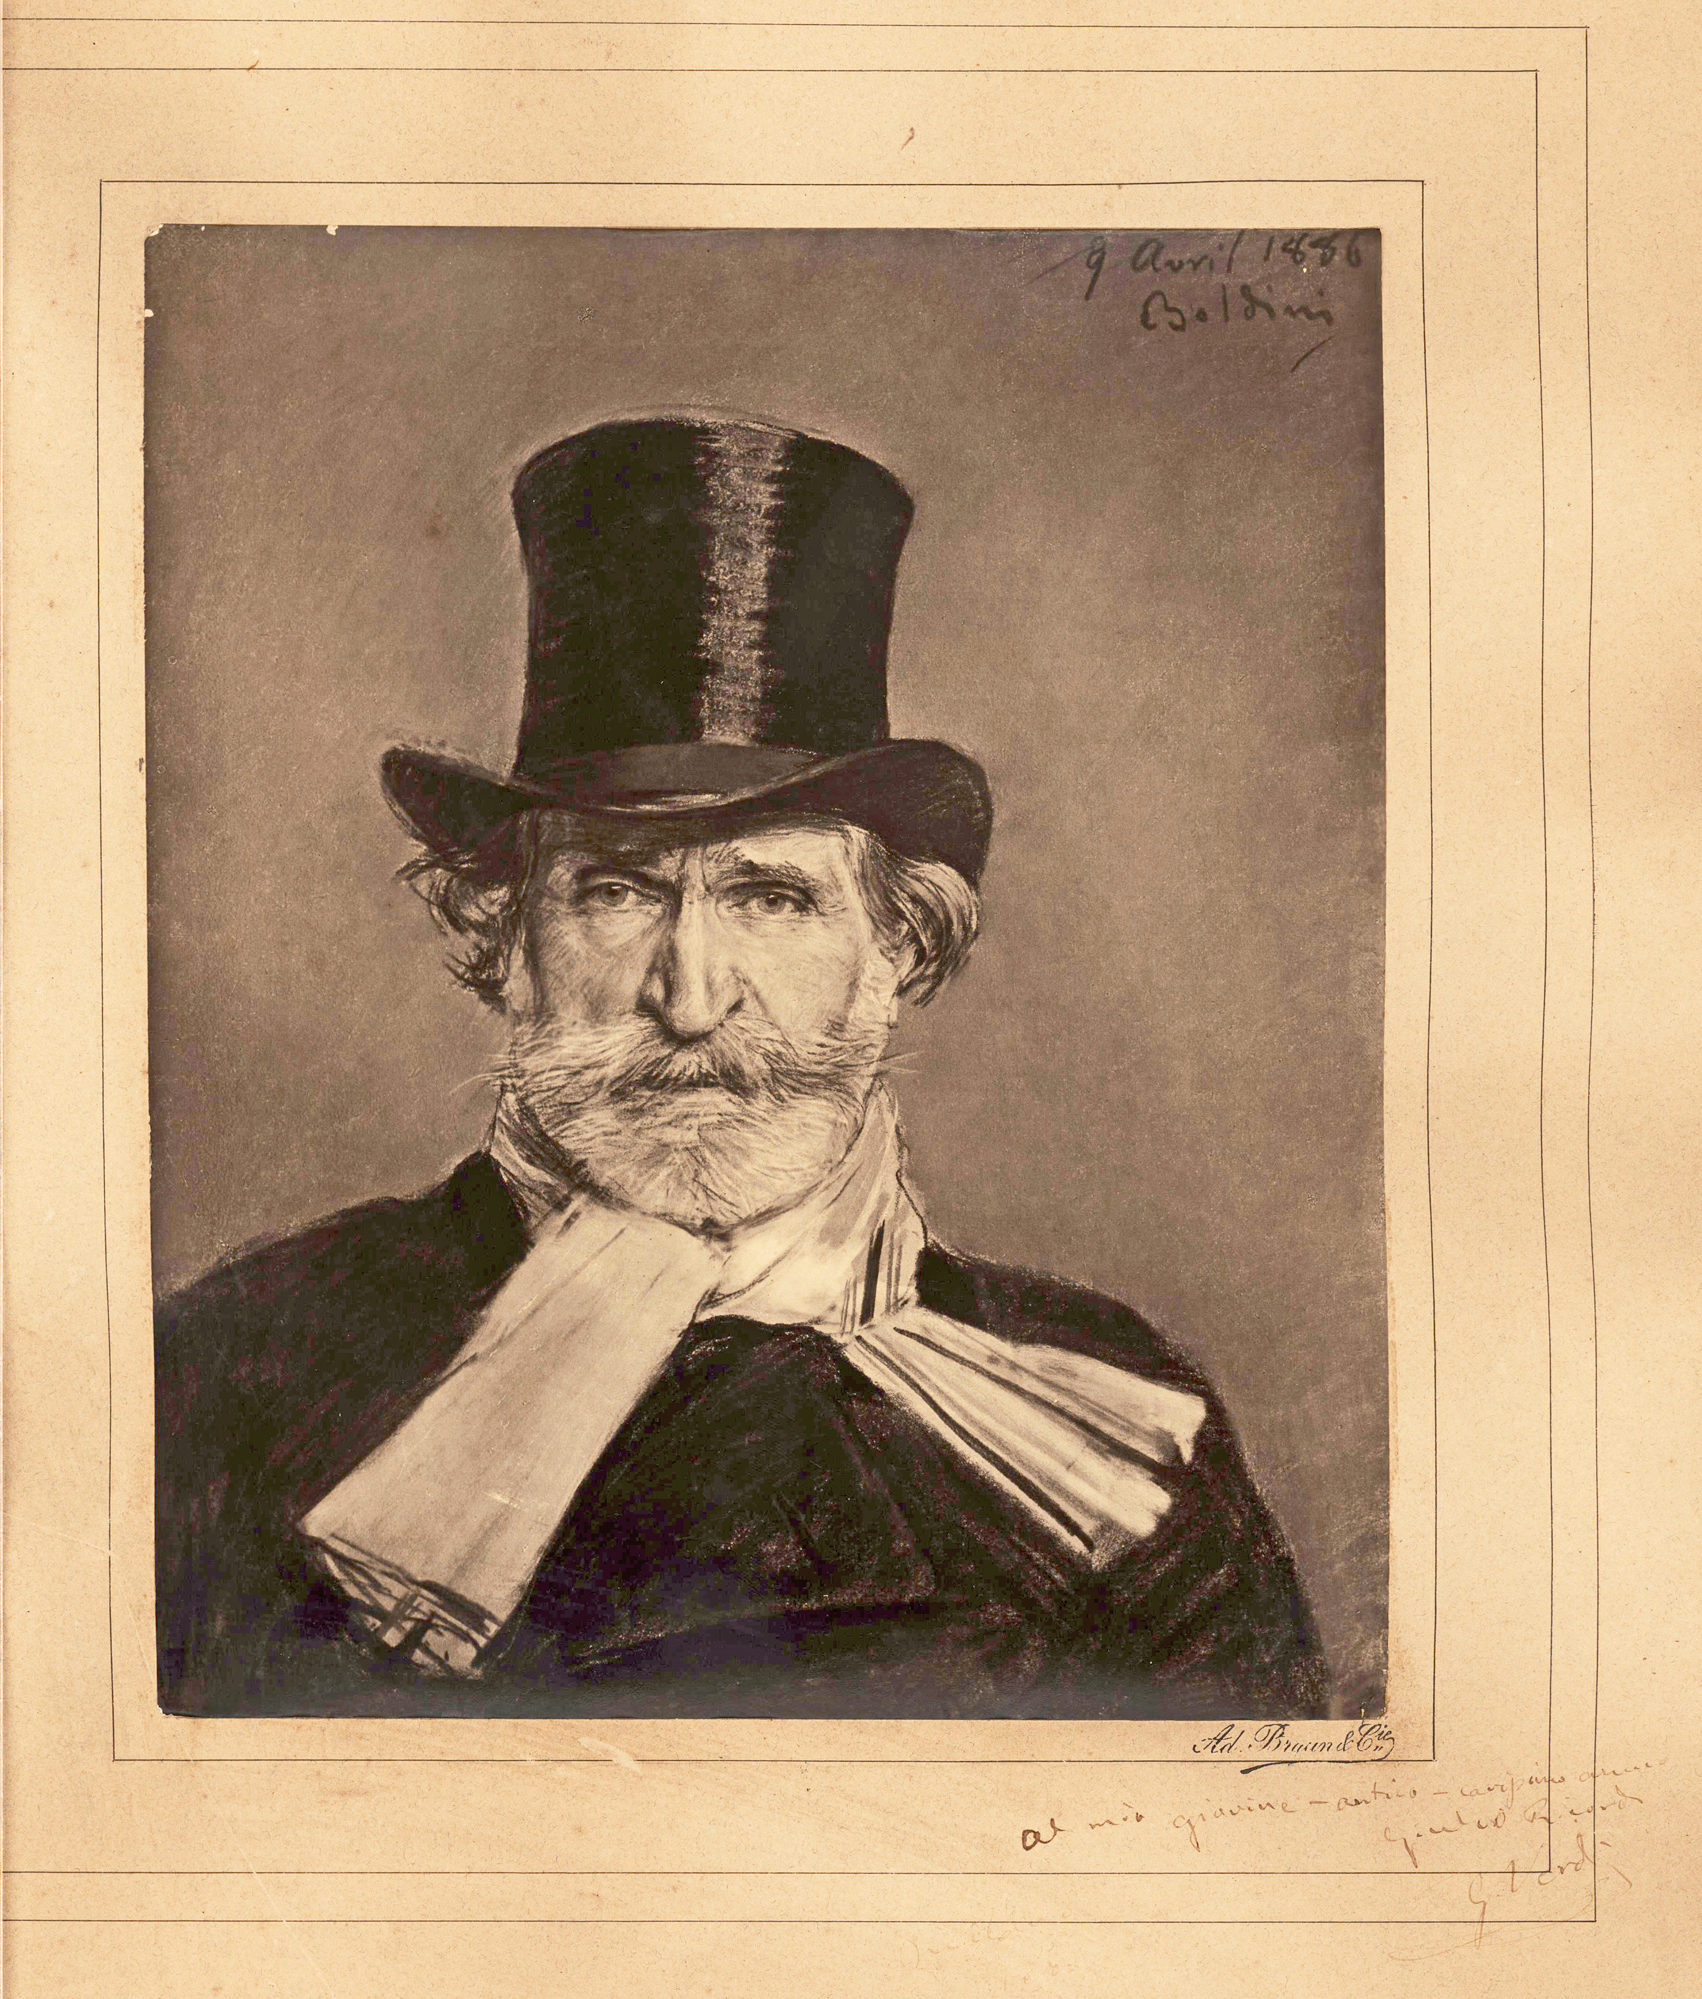 Huge “Boldini” Portrait by Adolphe Braun Inscribed by Giuseppe Verdi to His Publisher Giulio Ricordi